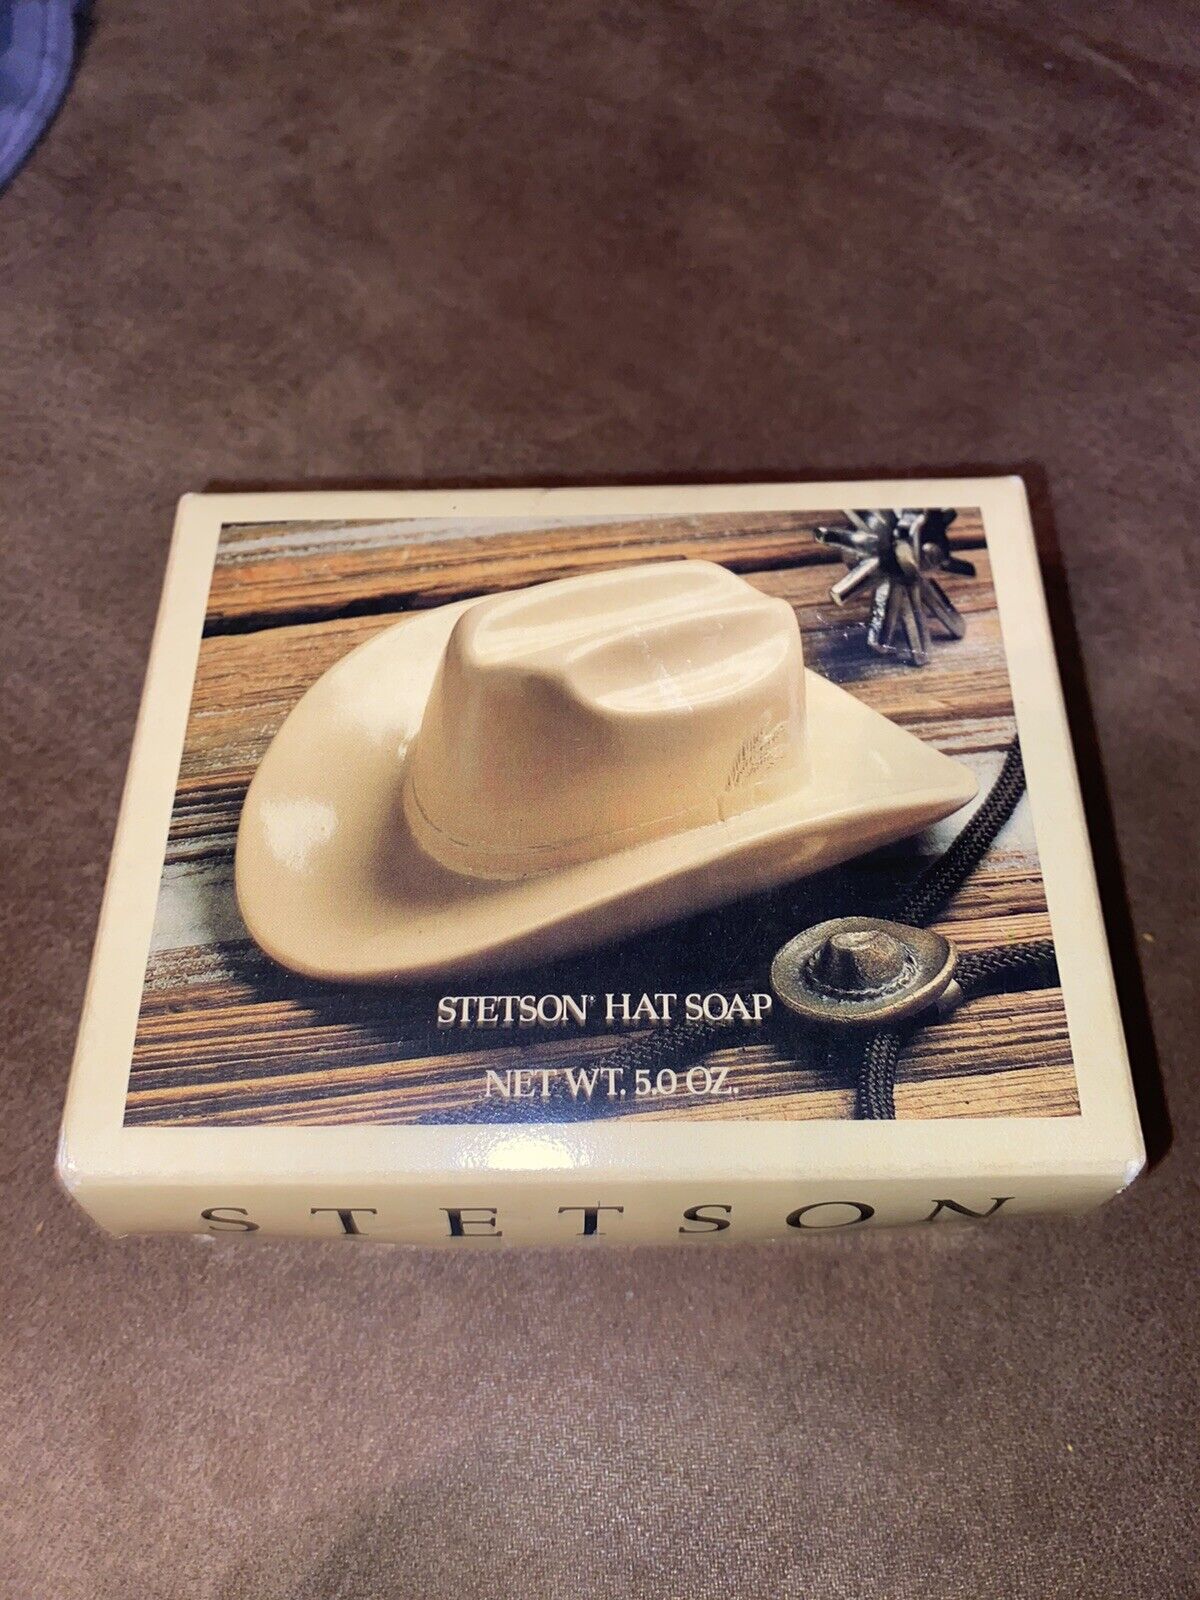 Vintage Stetson Hat Shaped Soap in original box